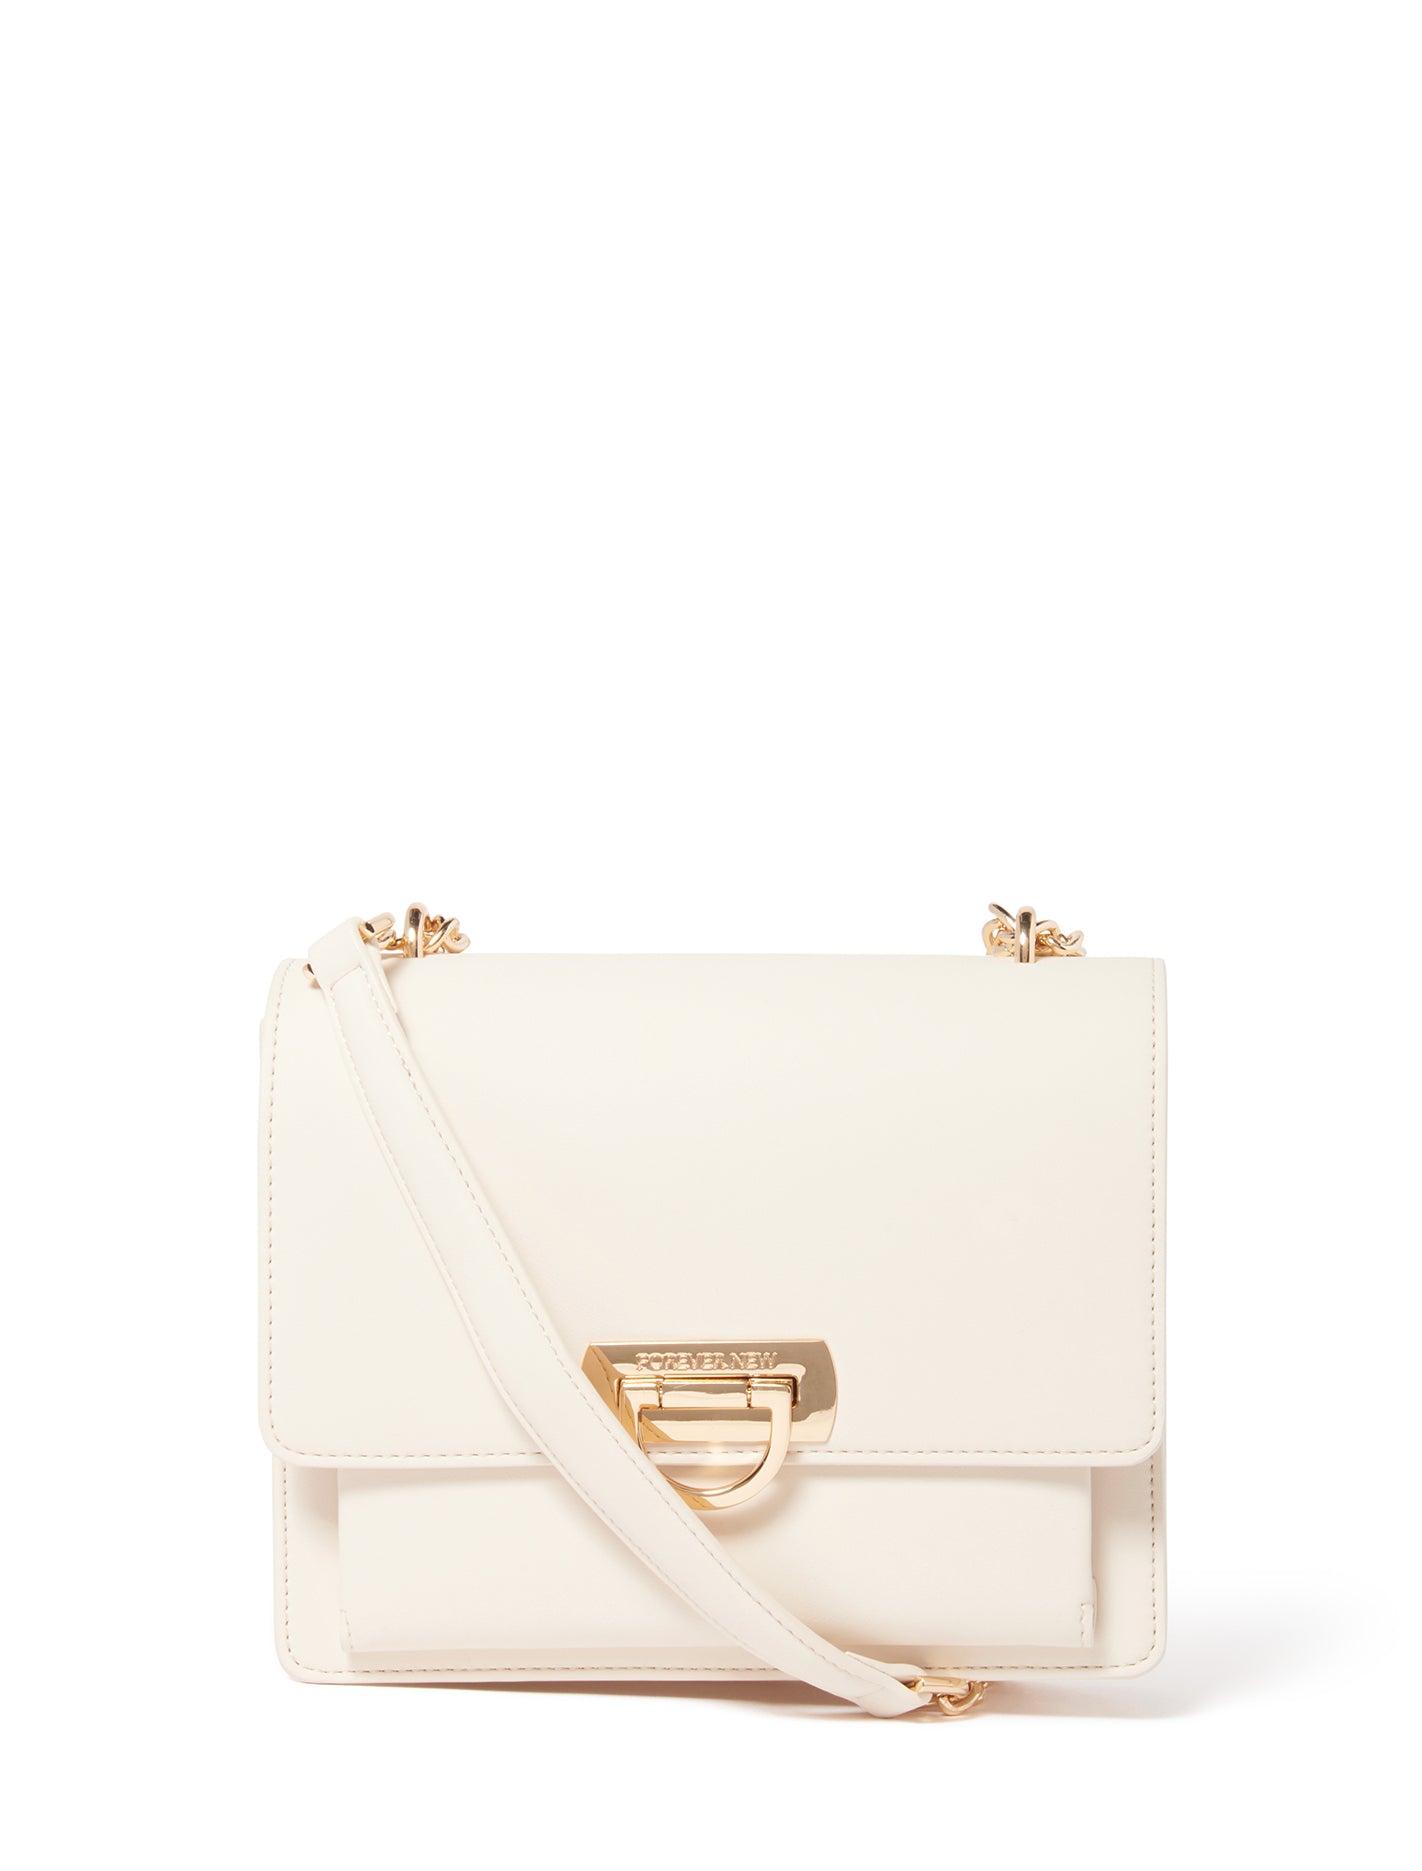 Forever New Handbags | Shop Women's Handbags Online